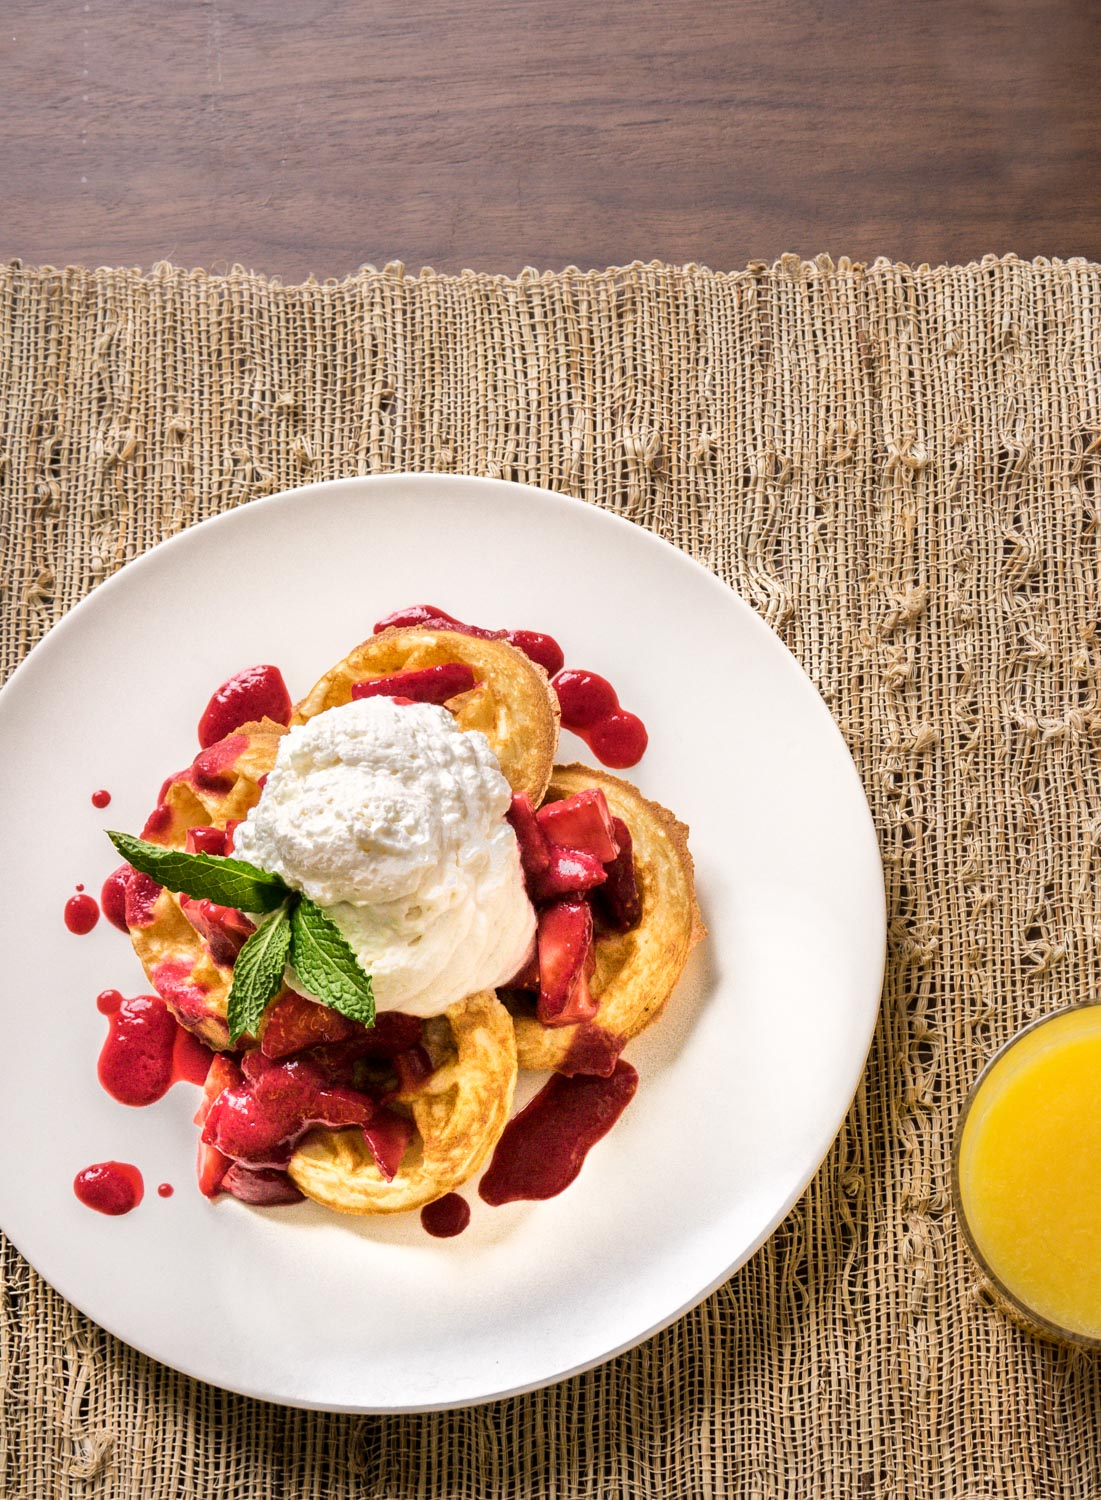 photography-of-food-breakfast-waffles-san-francisco-restaurant-by-afewgoodclicks